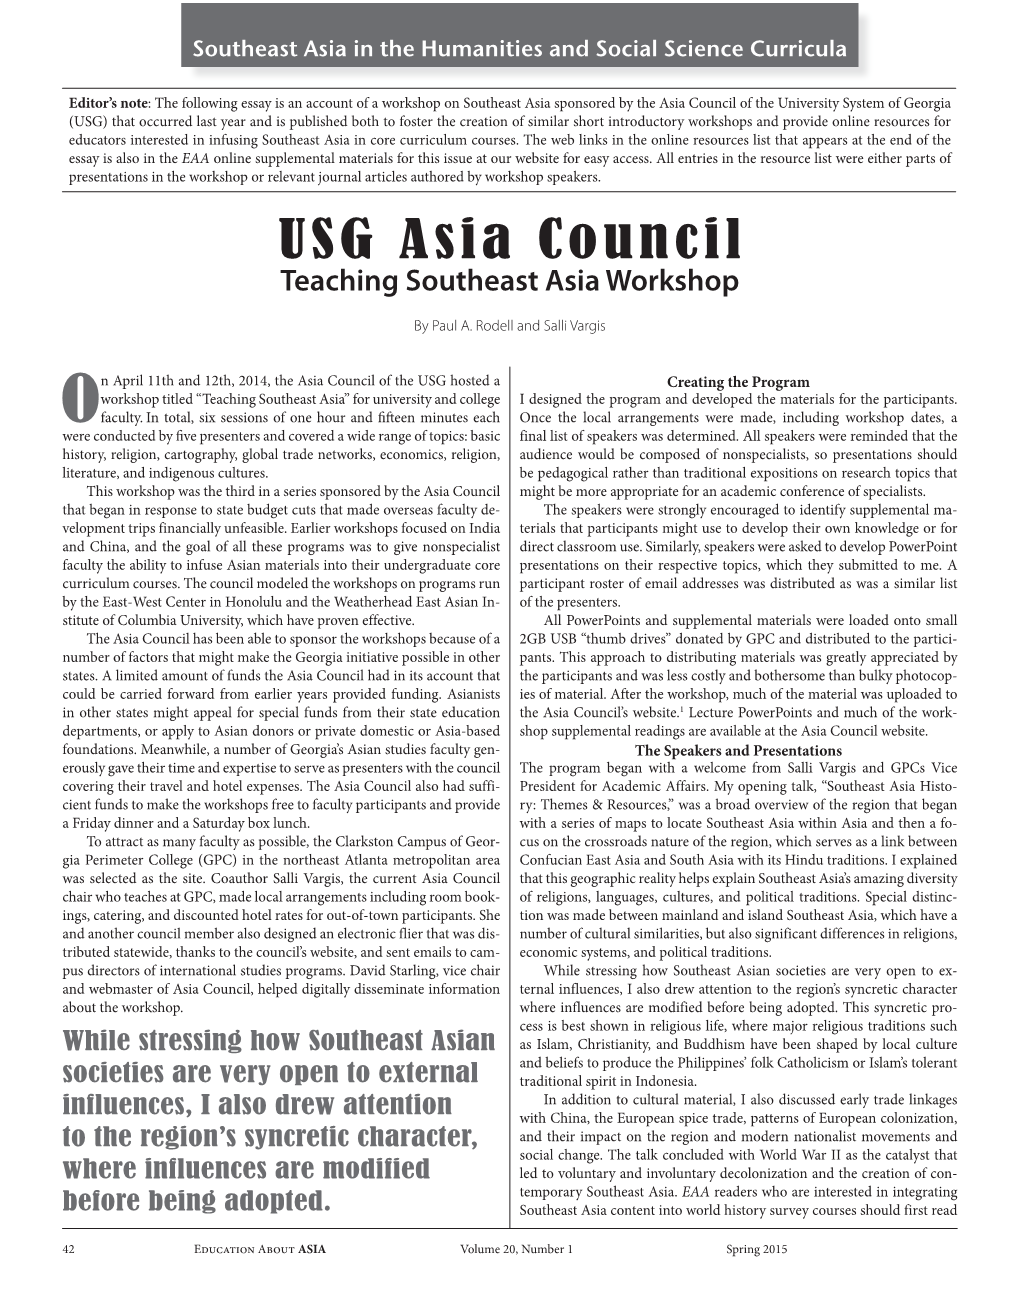 USG Asia Council Teaching Southeast Asia Workshop